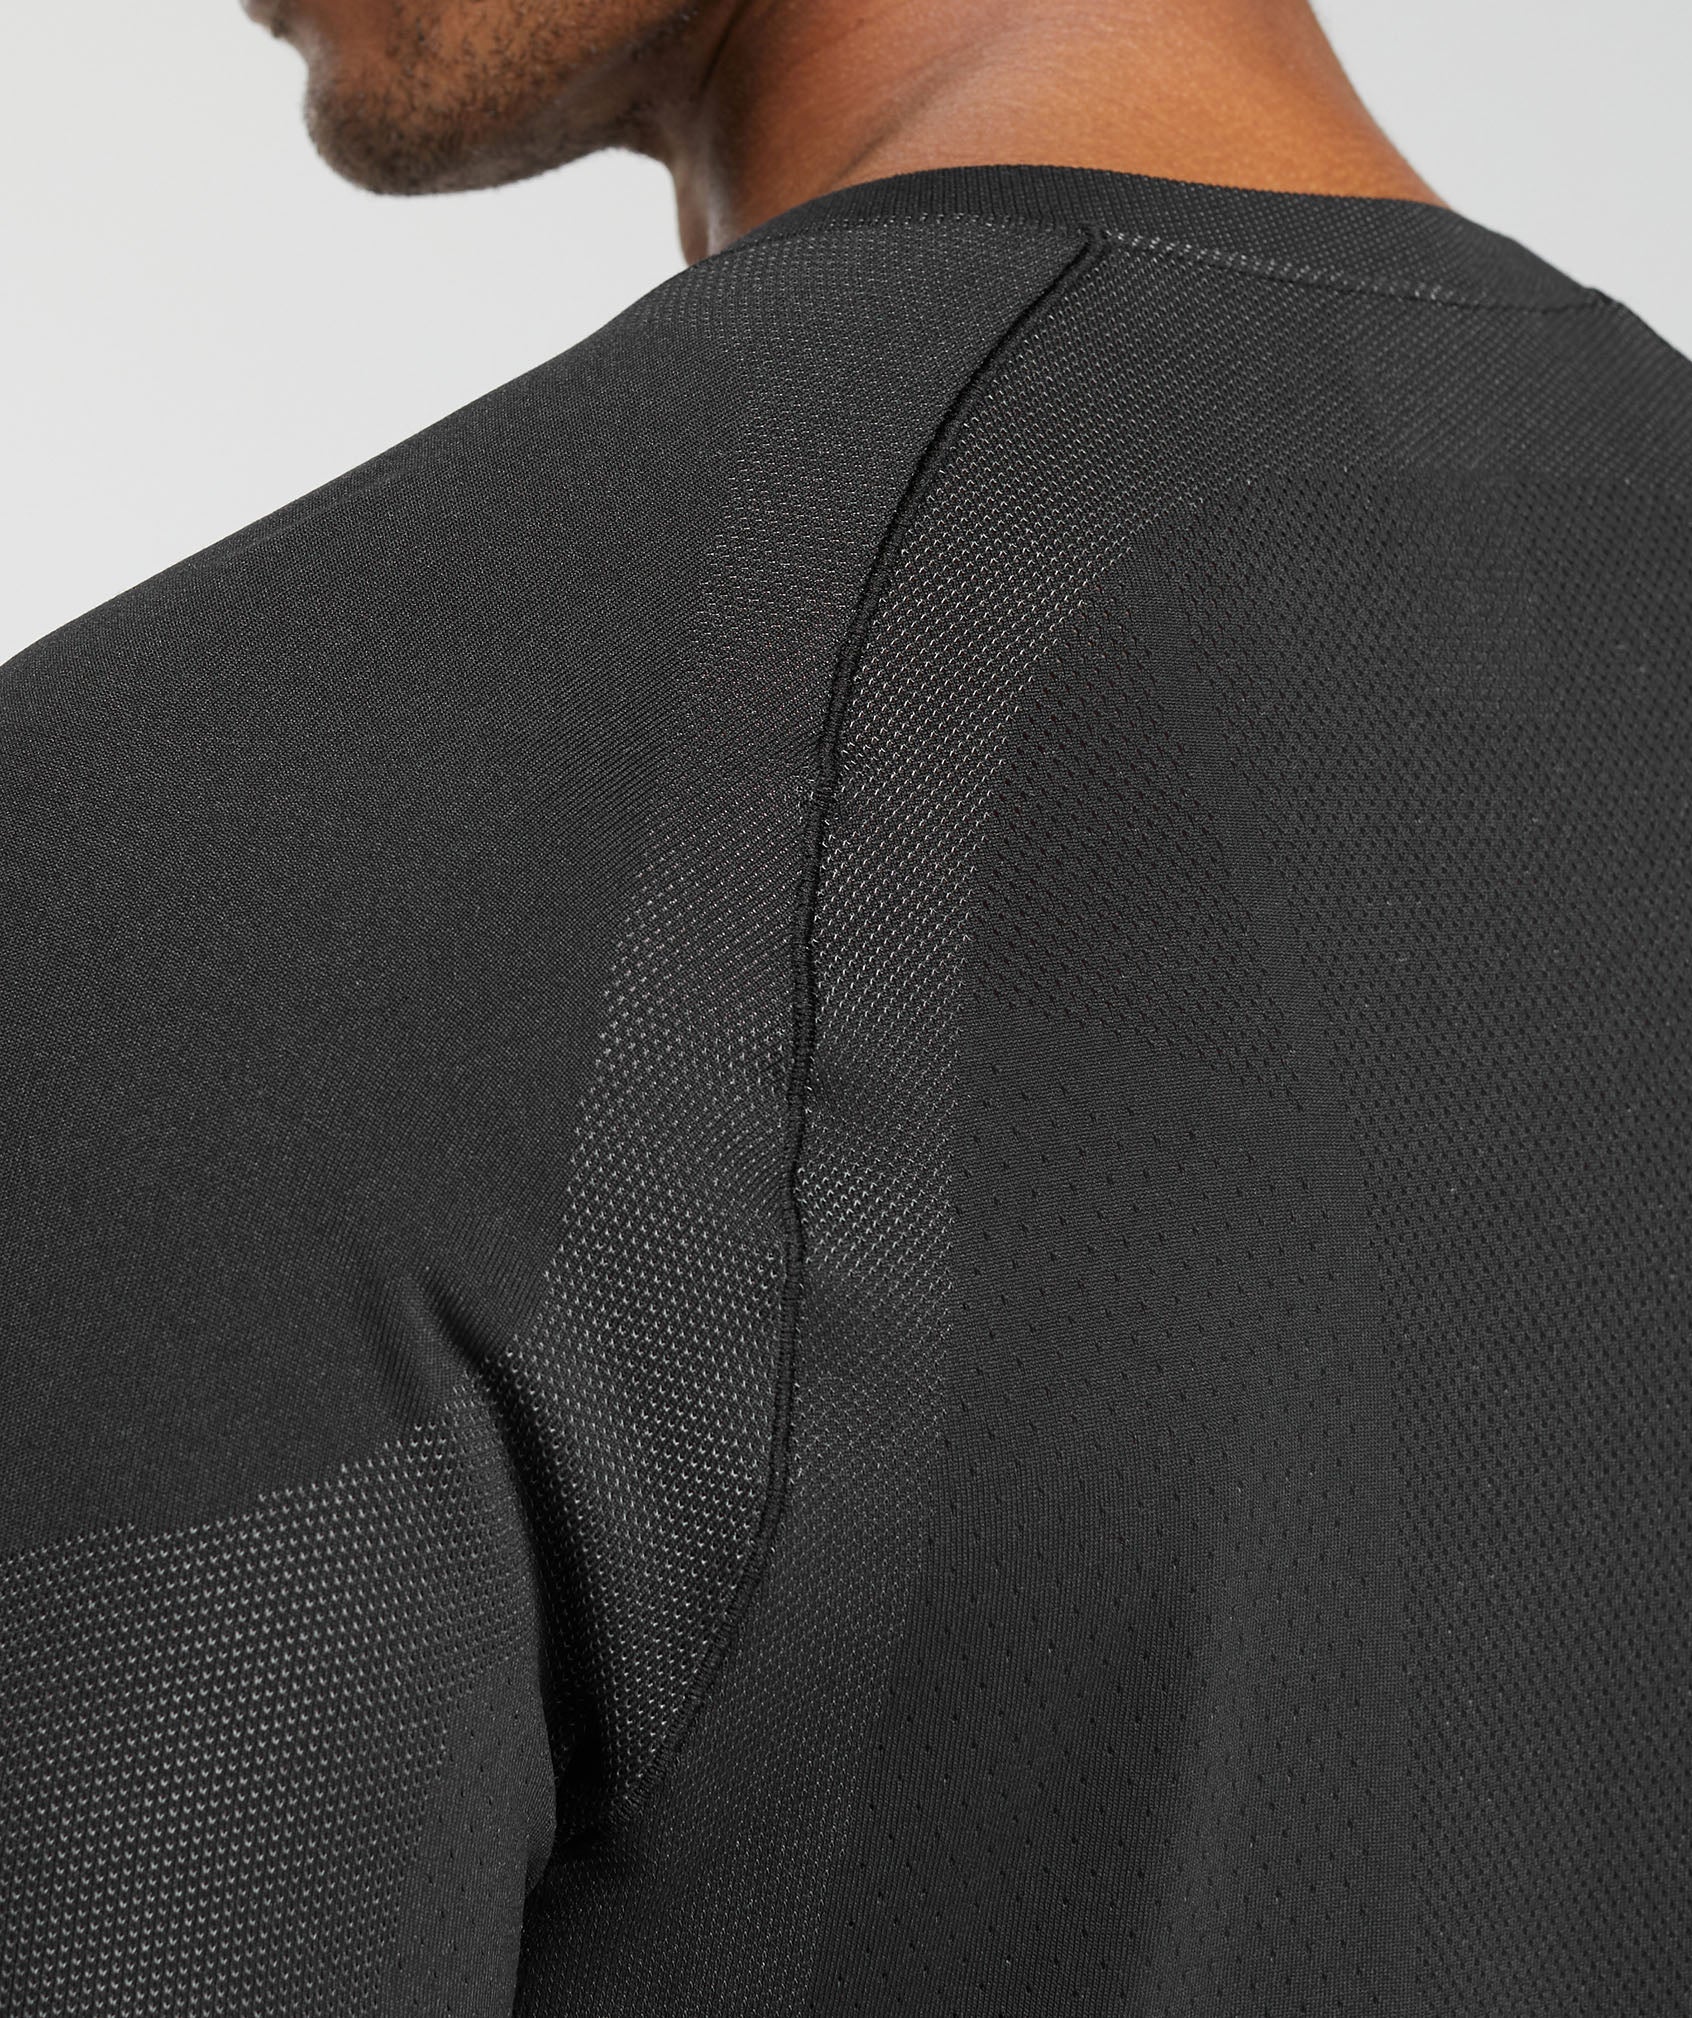 Apex Seamless T-Shirt in Black/Dark Grey - view 6